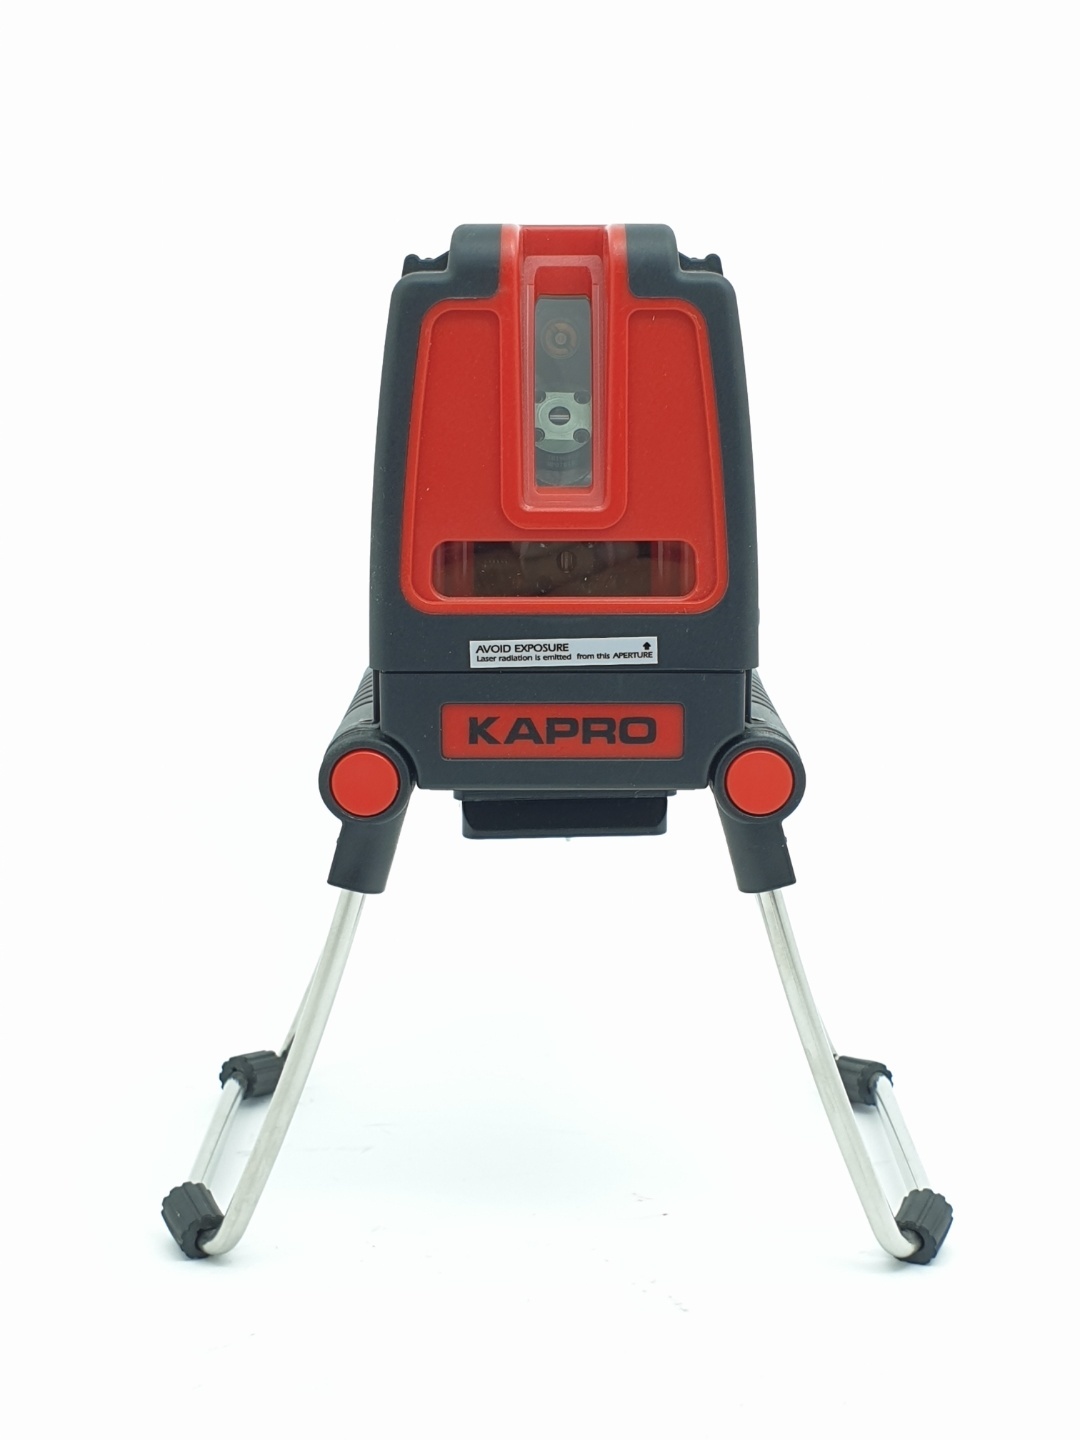 KAPRO เครื่องวัดระดับเลเซอร์ (แสงสีแดง) พร้อมขาตั้ง 873R-LLS/TP 